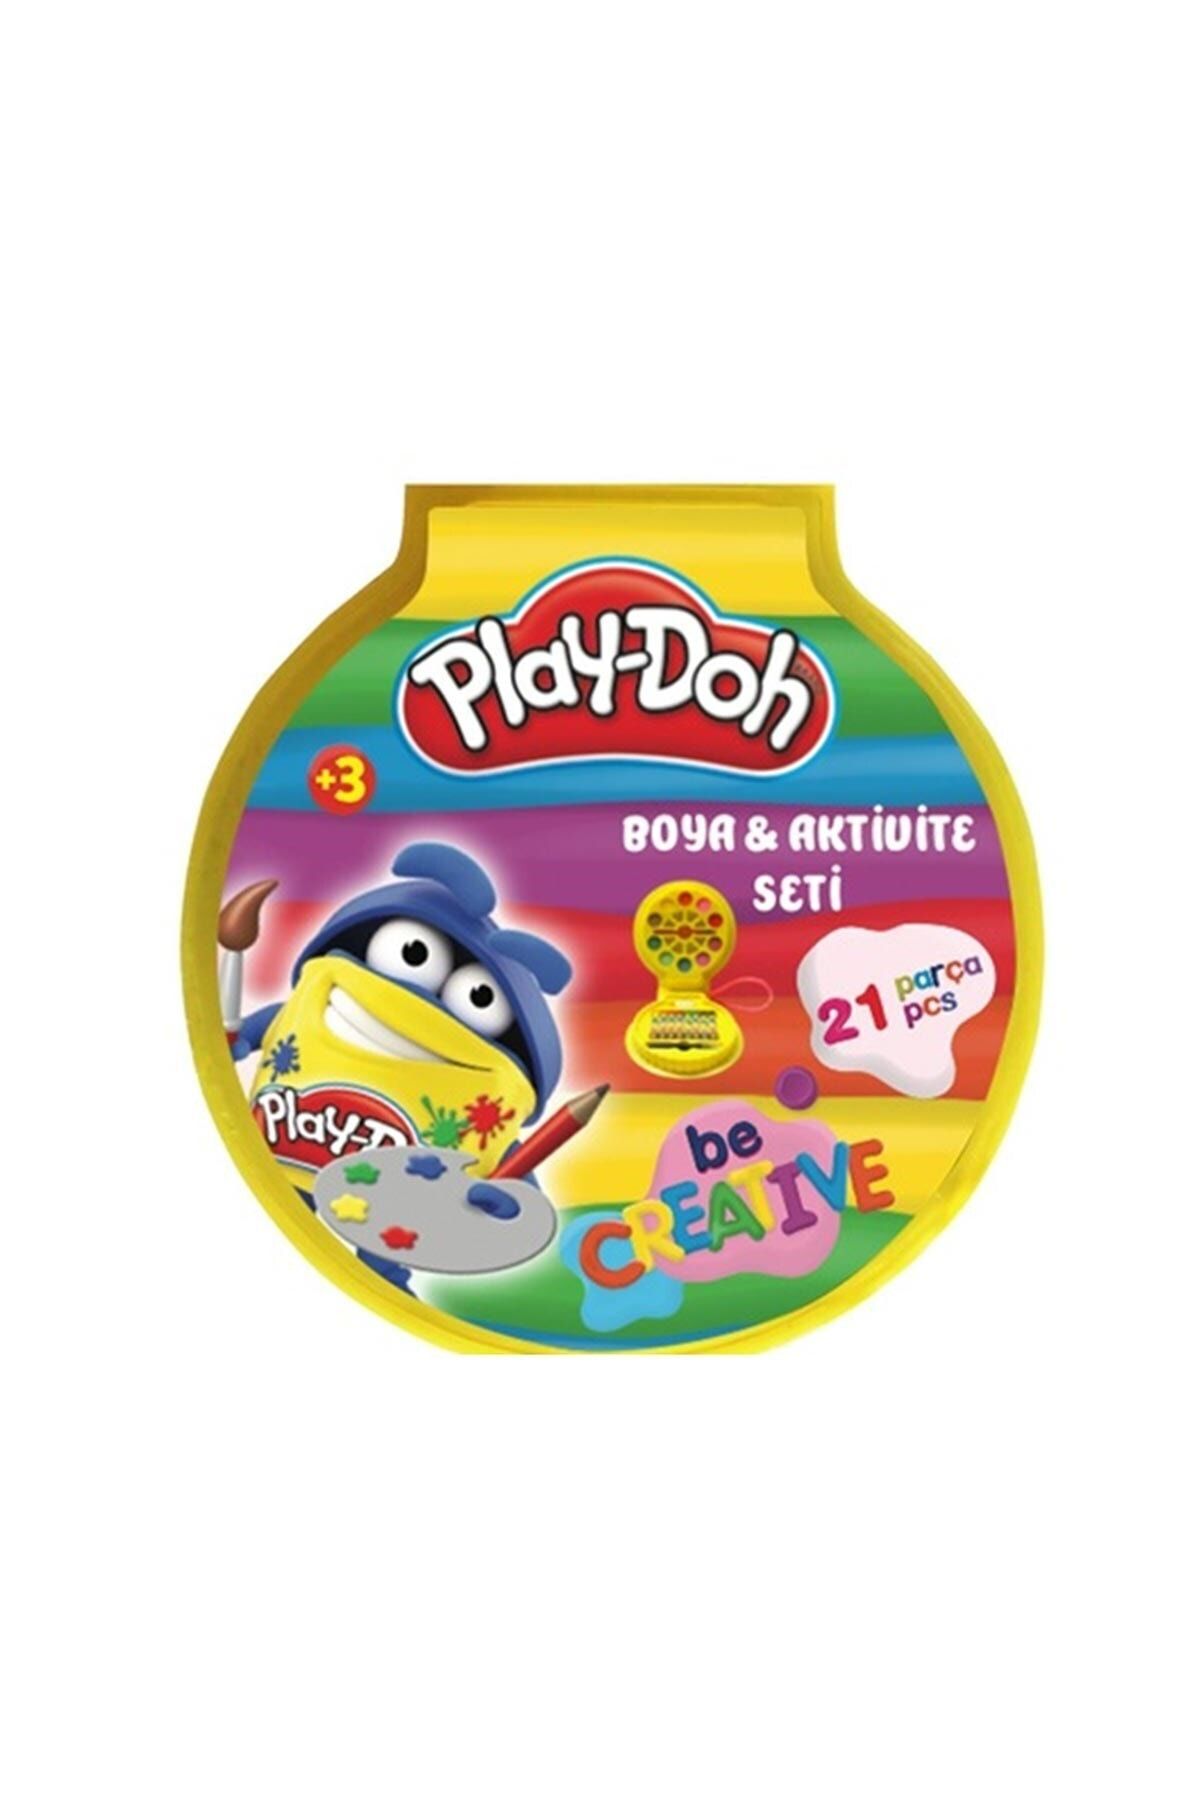 Play Doh Play-doh Kırtasiye Seti (21 Parça)